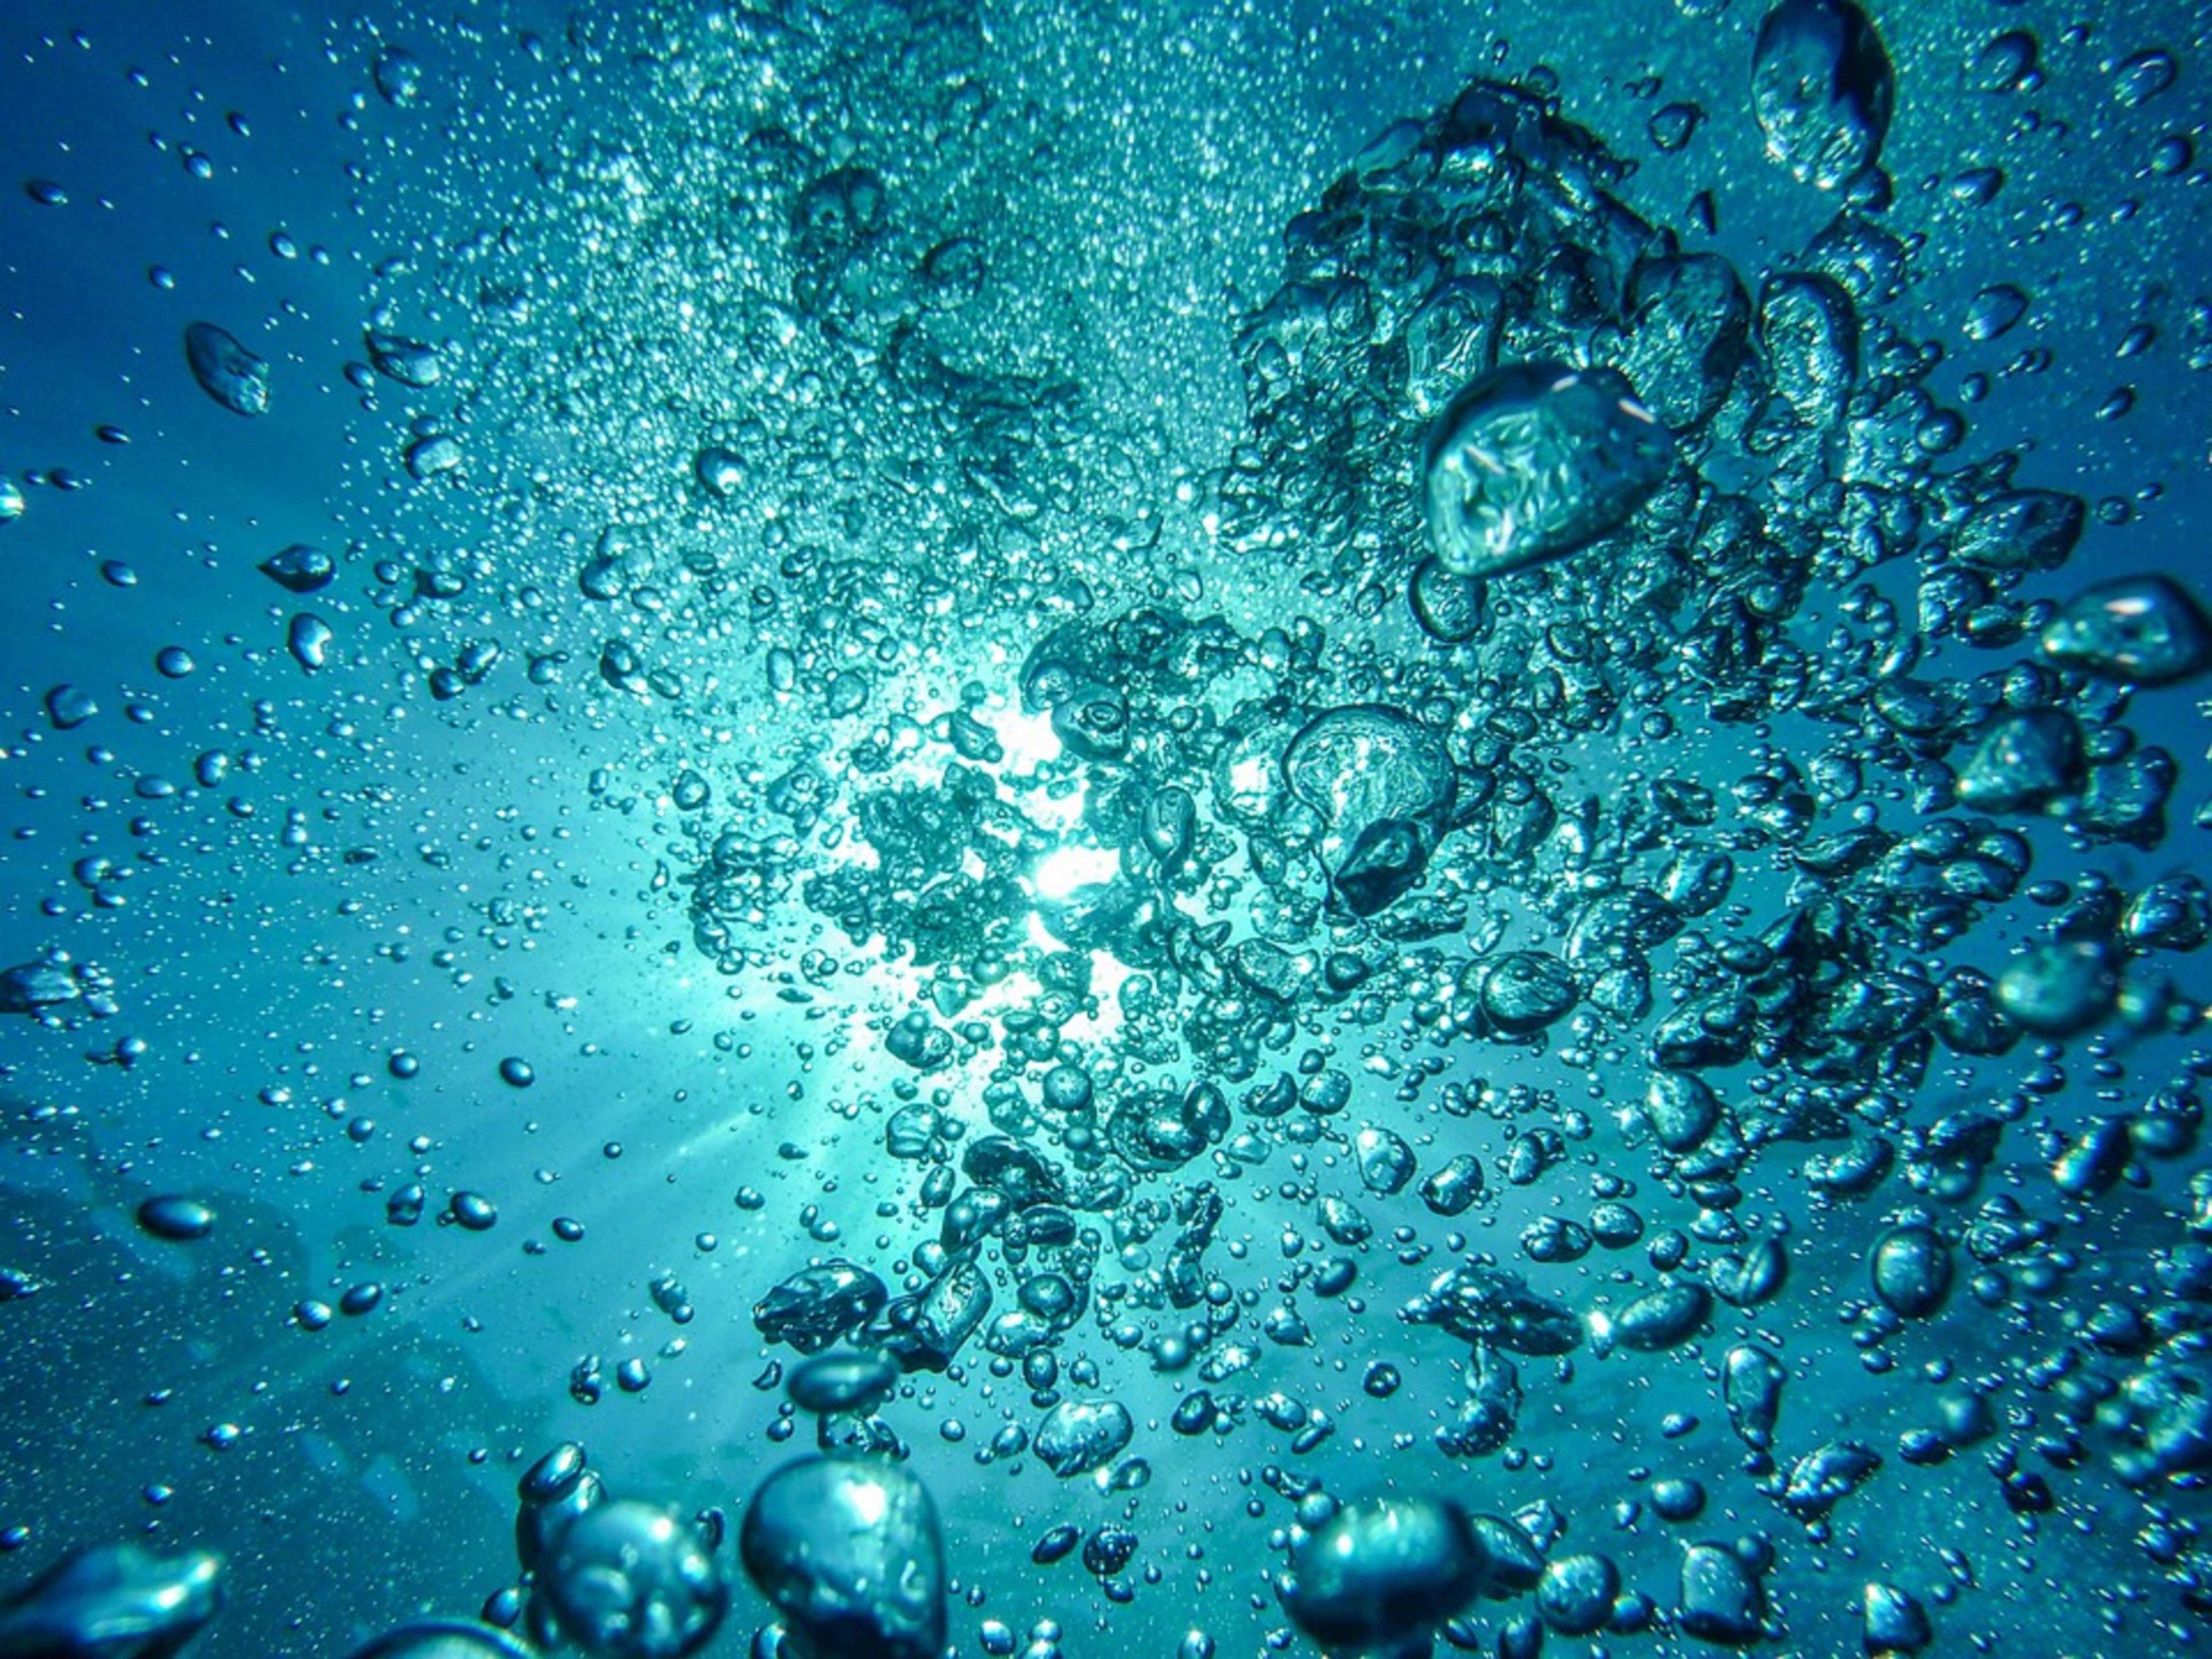 Ковид вода. Вода. Вода фон. Пузыри под водой. Фон вода с пузырьками.